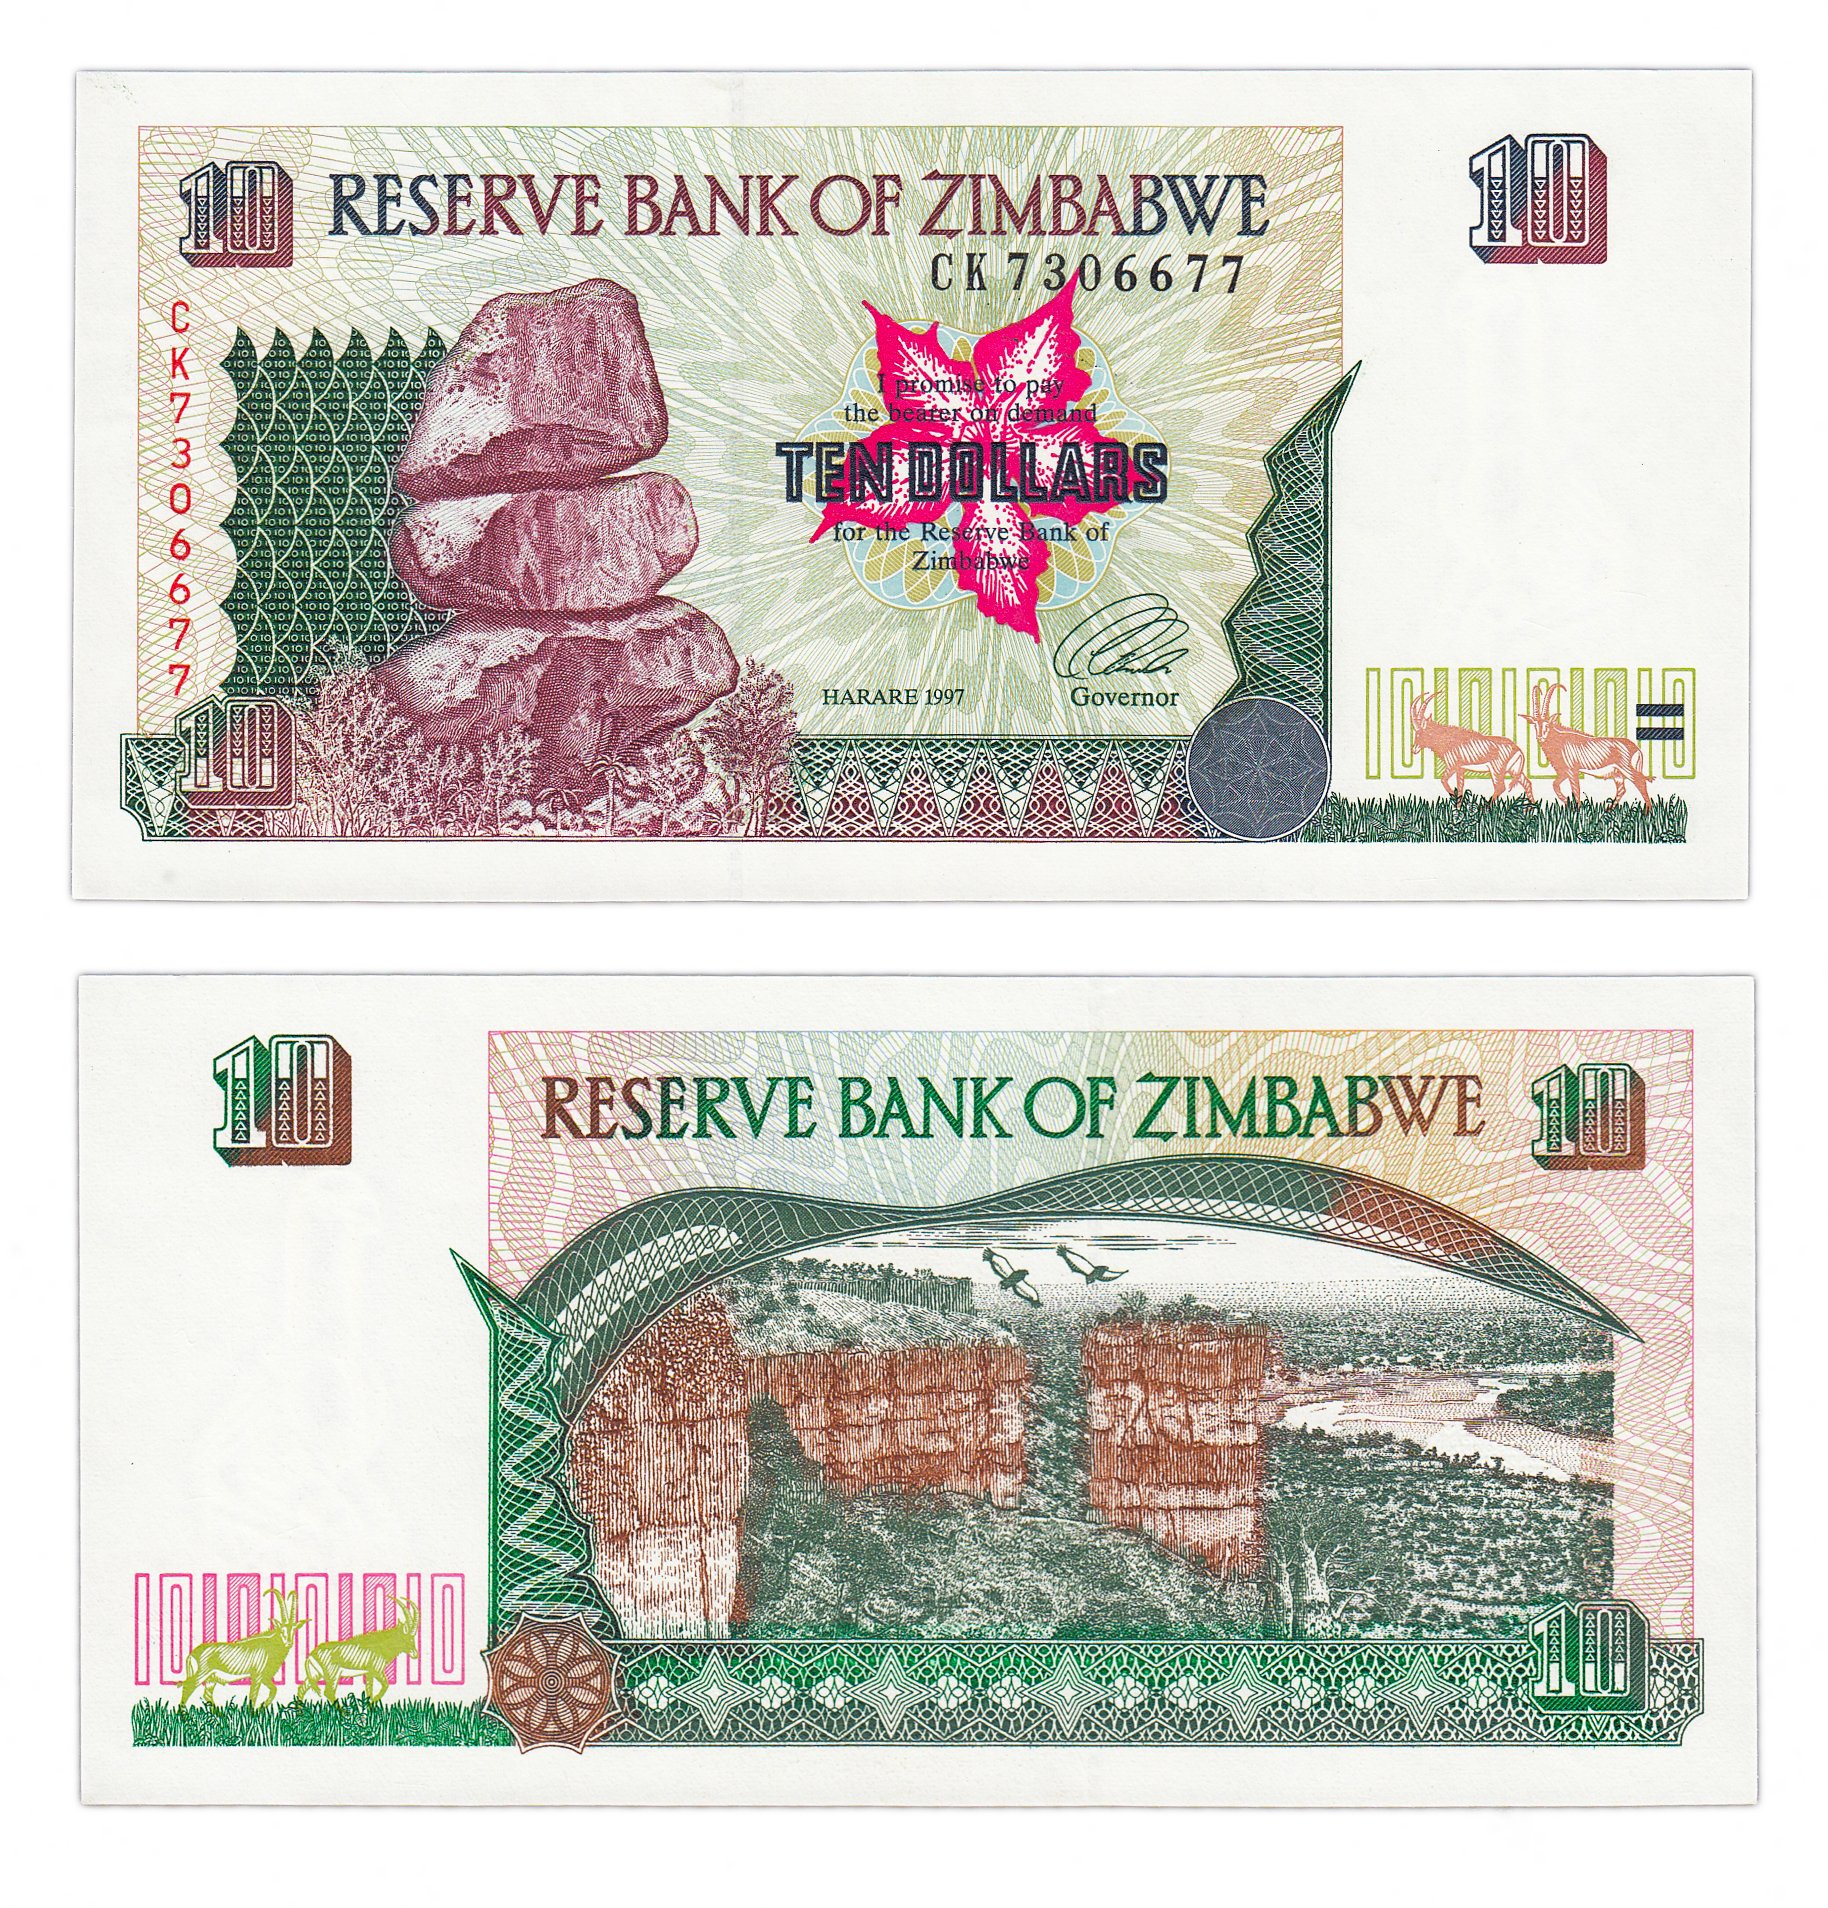 1997 долларов в рубли. 50 000 000 000зимбаба долар. Купюры Зимбабве. Зимбабвийский доллар купюры. Денежные знаки Зимбабве.